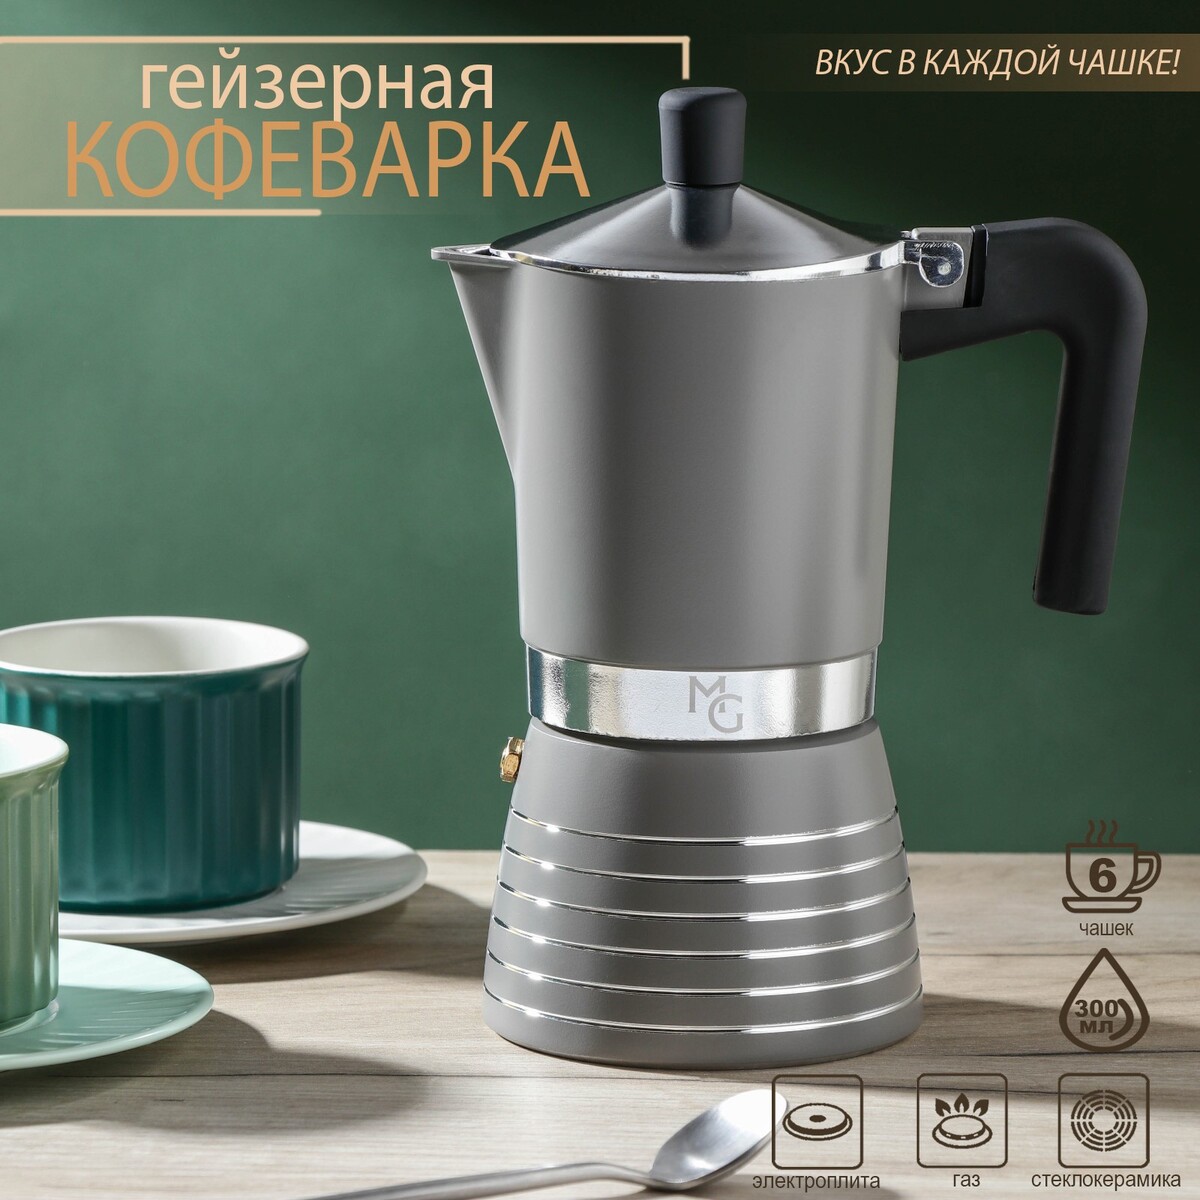 Кофеварка гейзерная magistro moka, на 6 чашек, 300 мл кофеварка гейзерная 300 мл vinzer latte crema 6 чашек